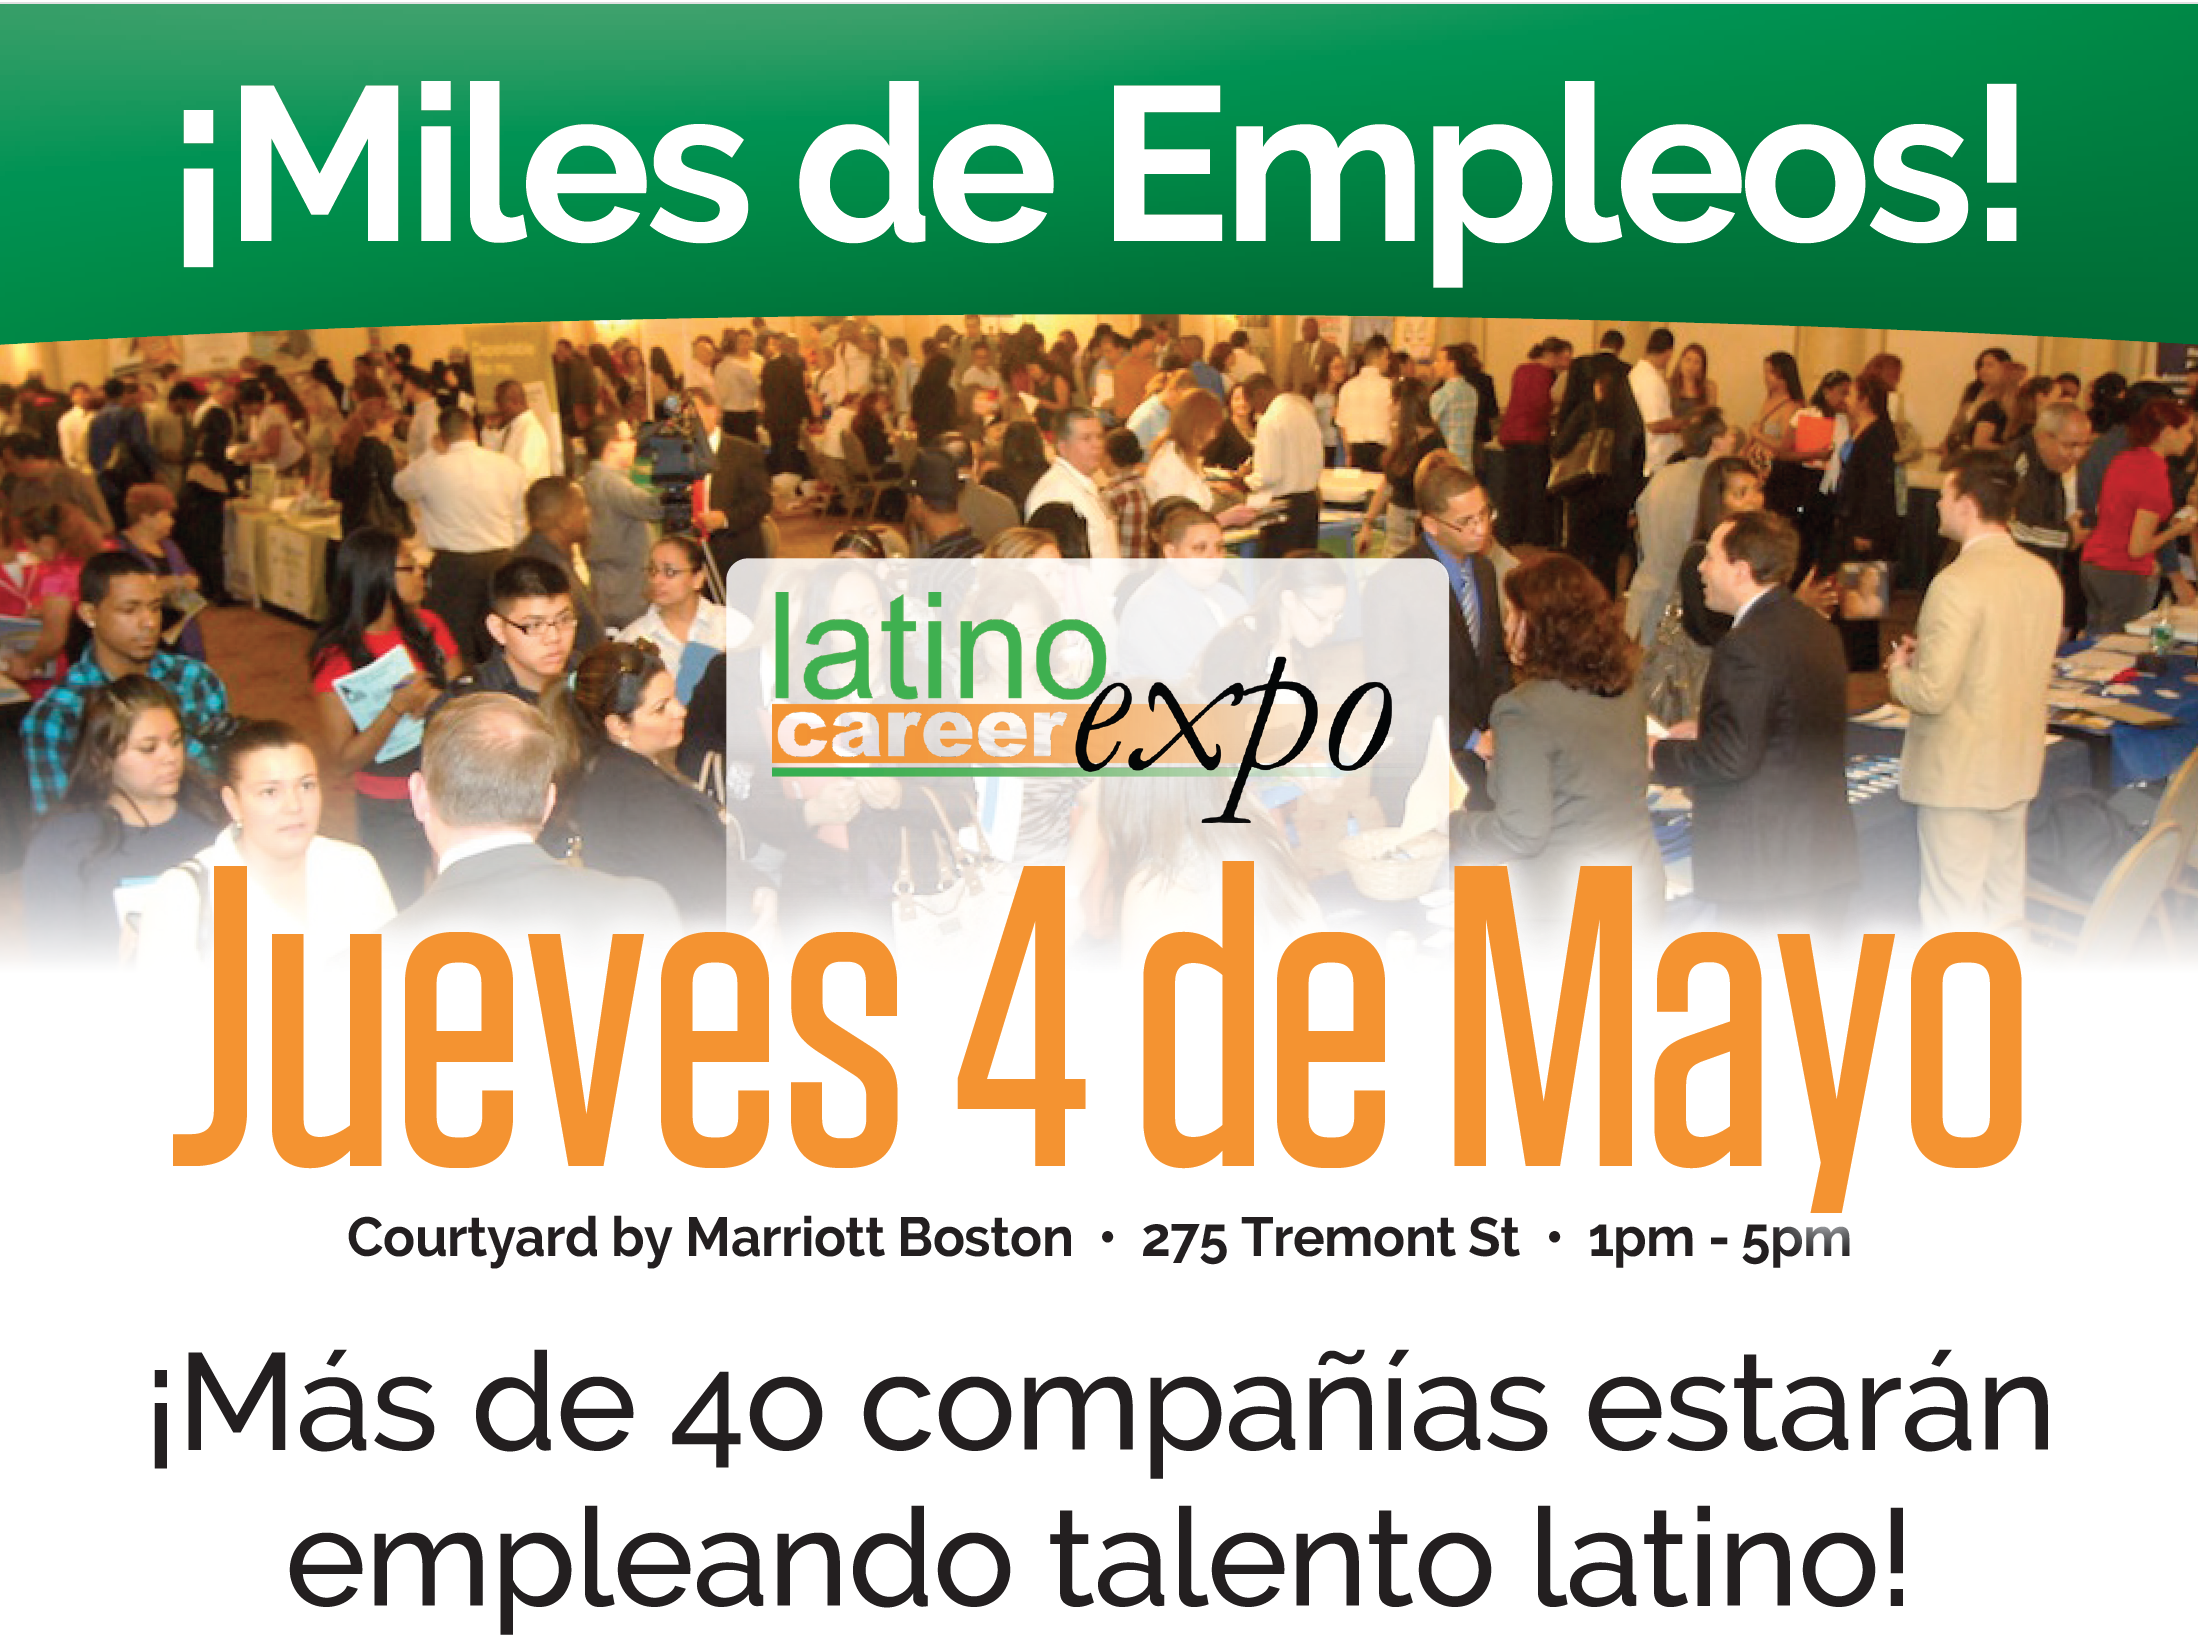 Latino Career Expo